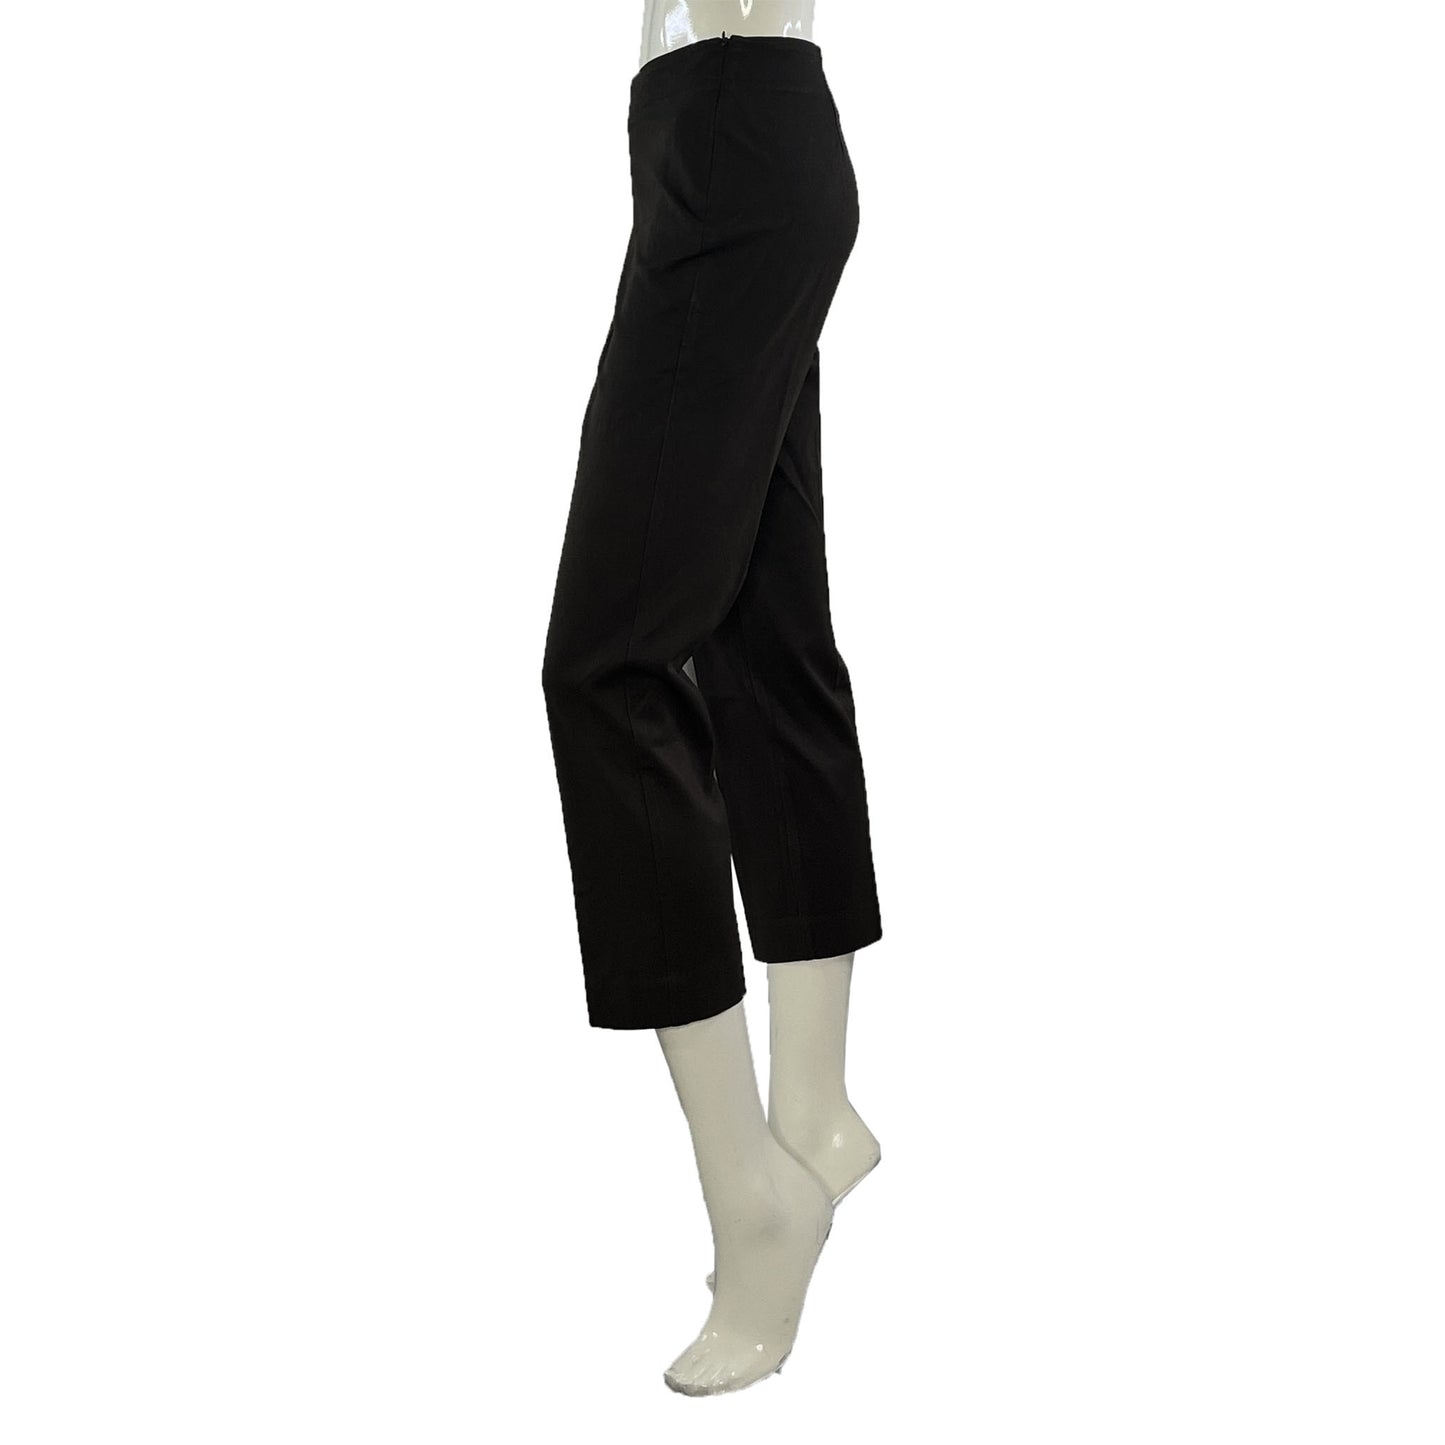 Talbots Dress Pants Side-Zipper Enclosure Brown Size 6P SKU 000416